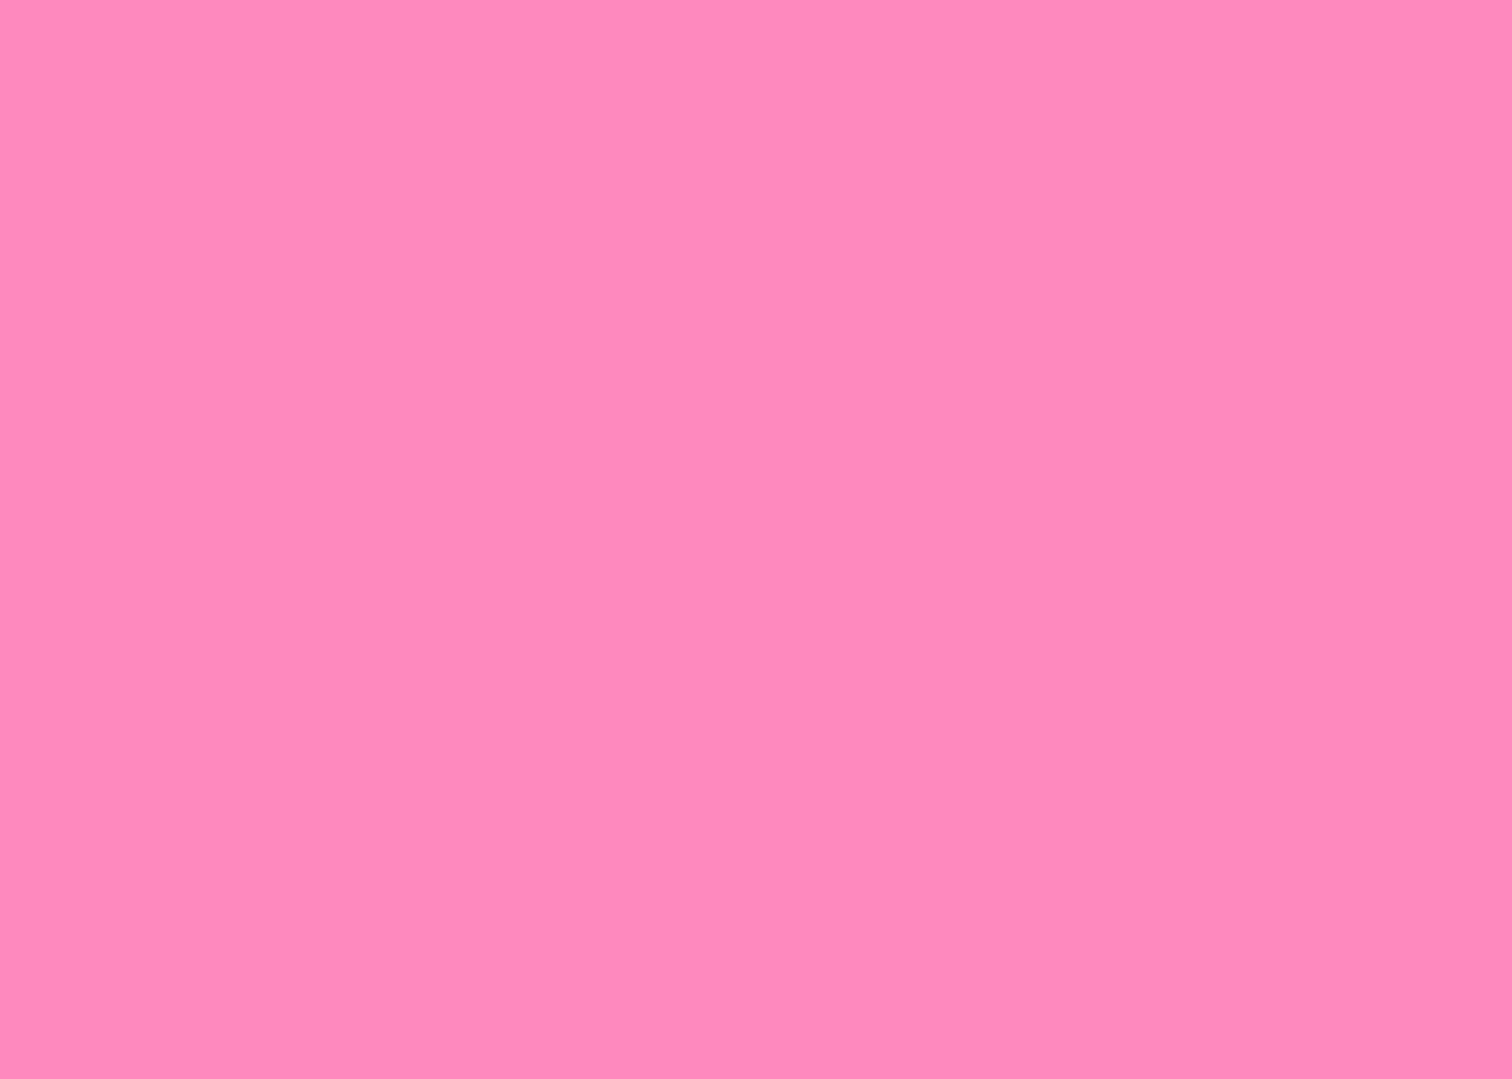 7 Best Plain pink background ideas  pink background fruit wallpaper  tumblr wallpaper